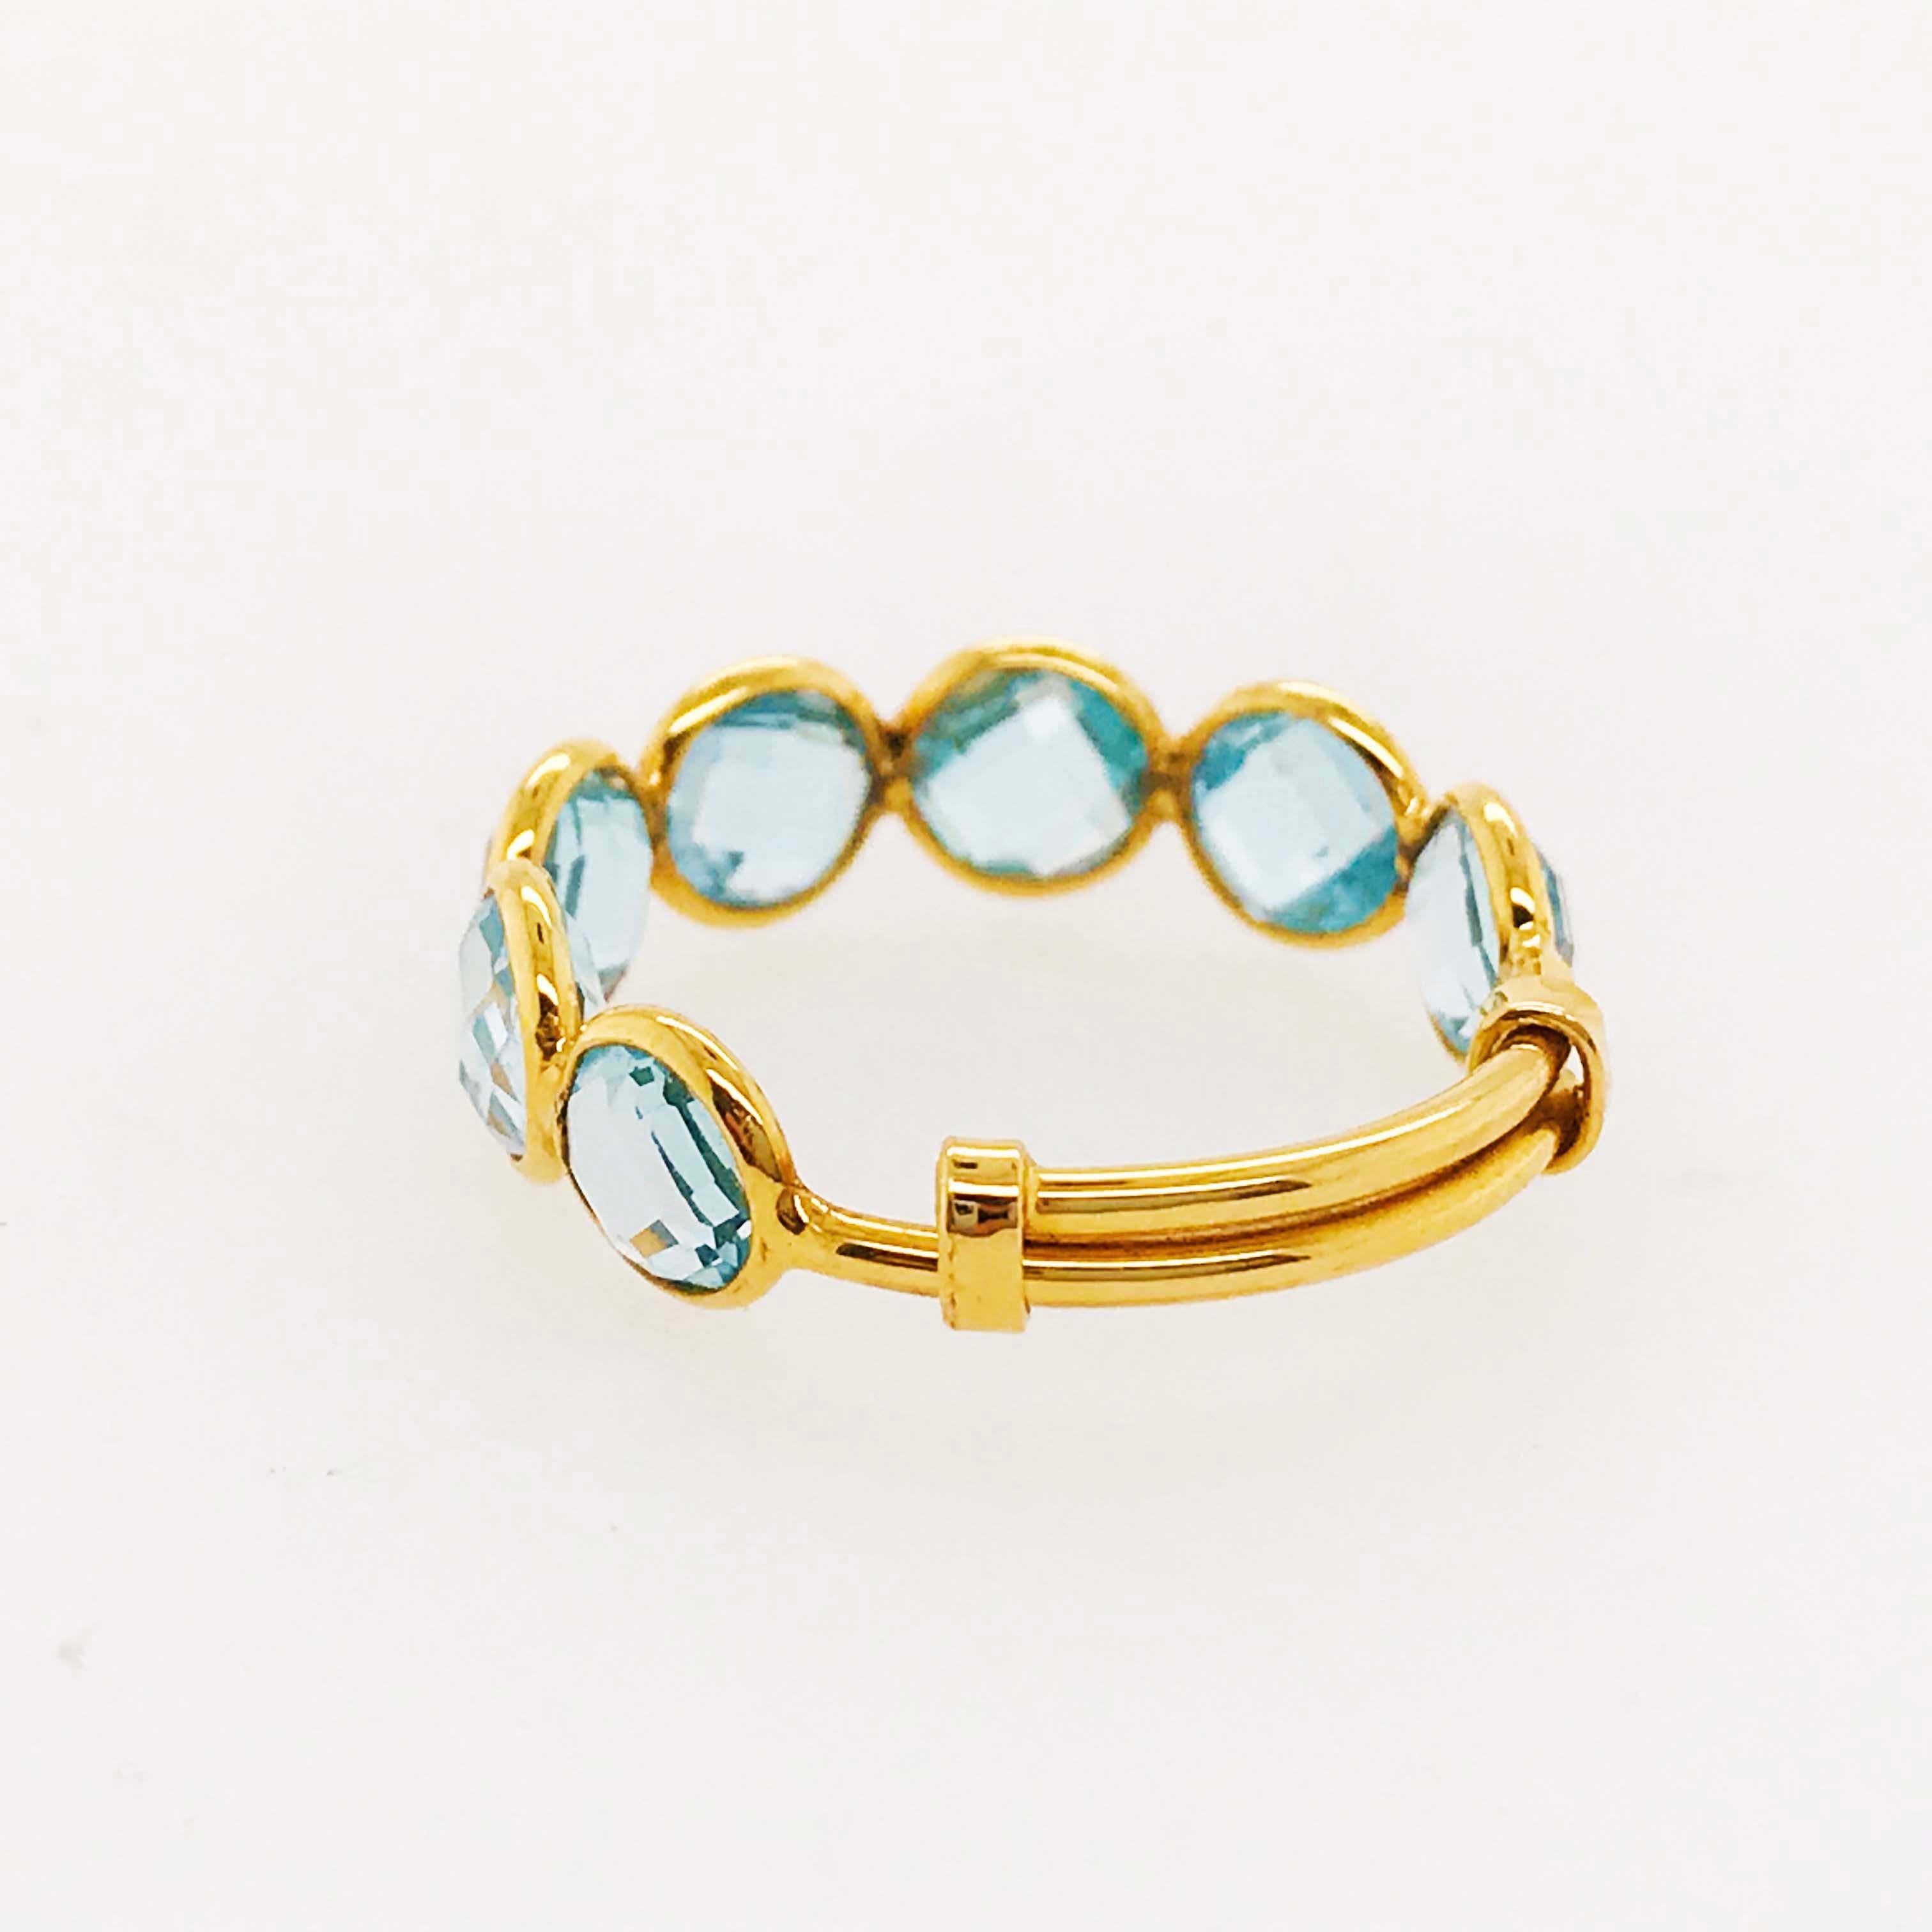 Rose Cut Blue Topaz Ring, Adjustable Ring in 18 Karat Gold 4 Carat Blue Topaz Gemstone